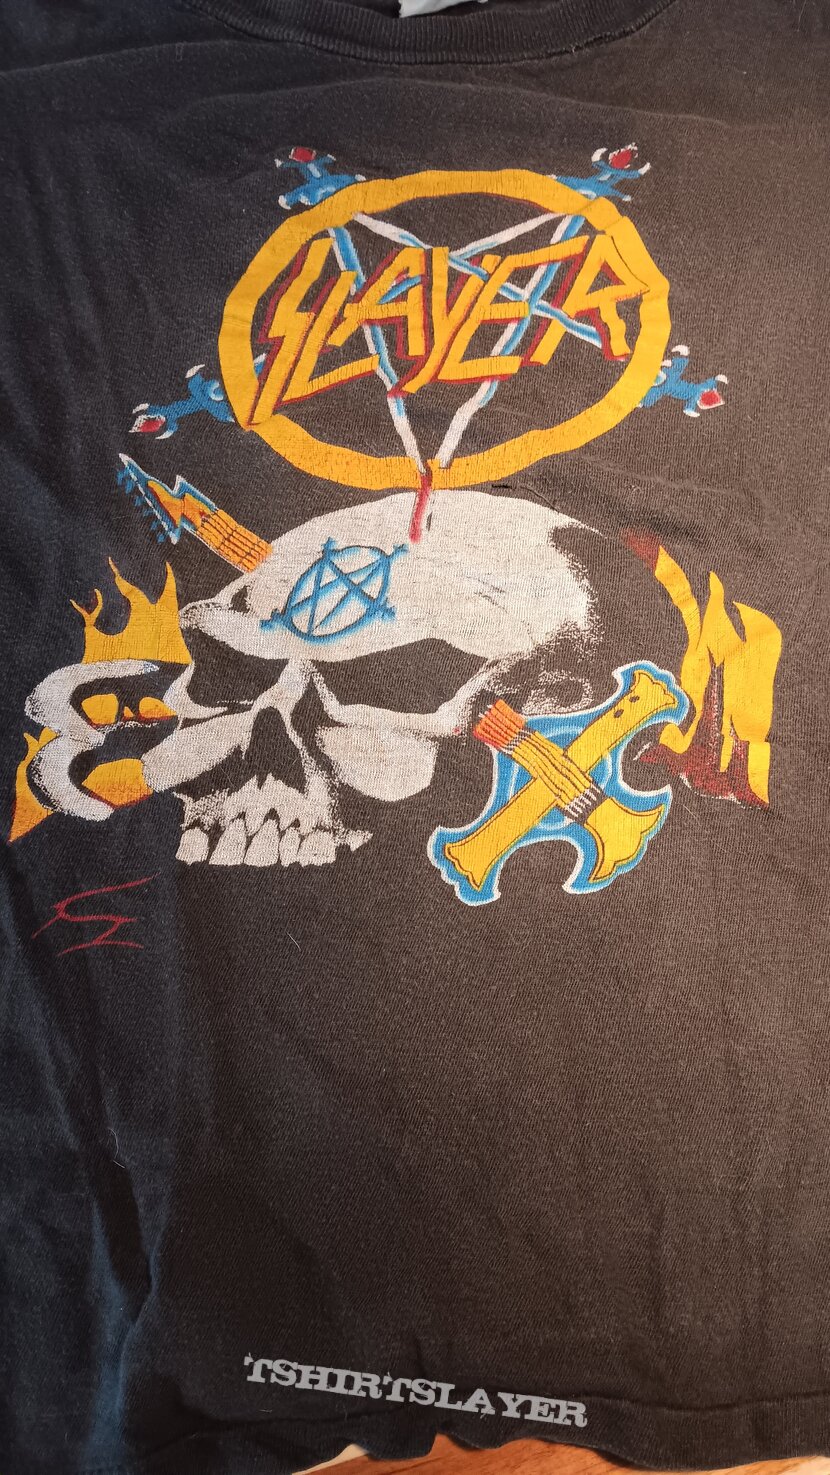 Slayer South of heaven Bootleg Shirt